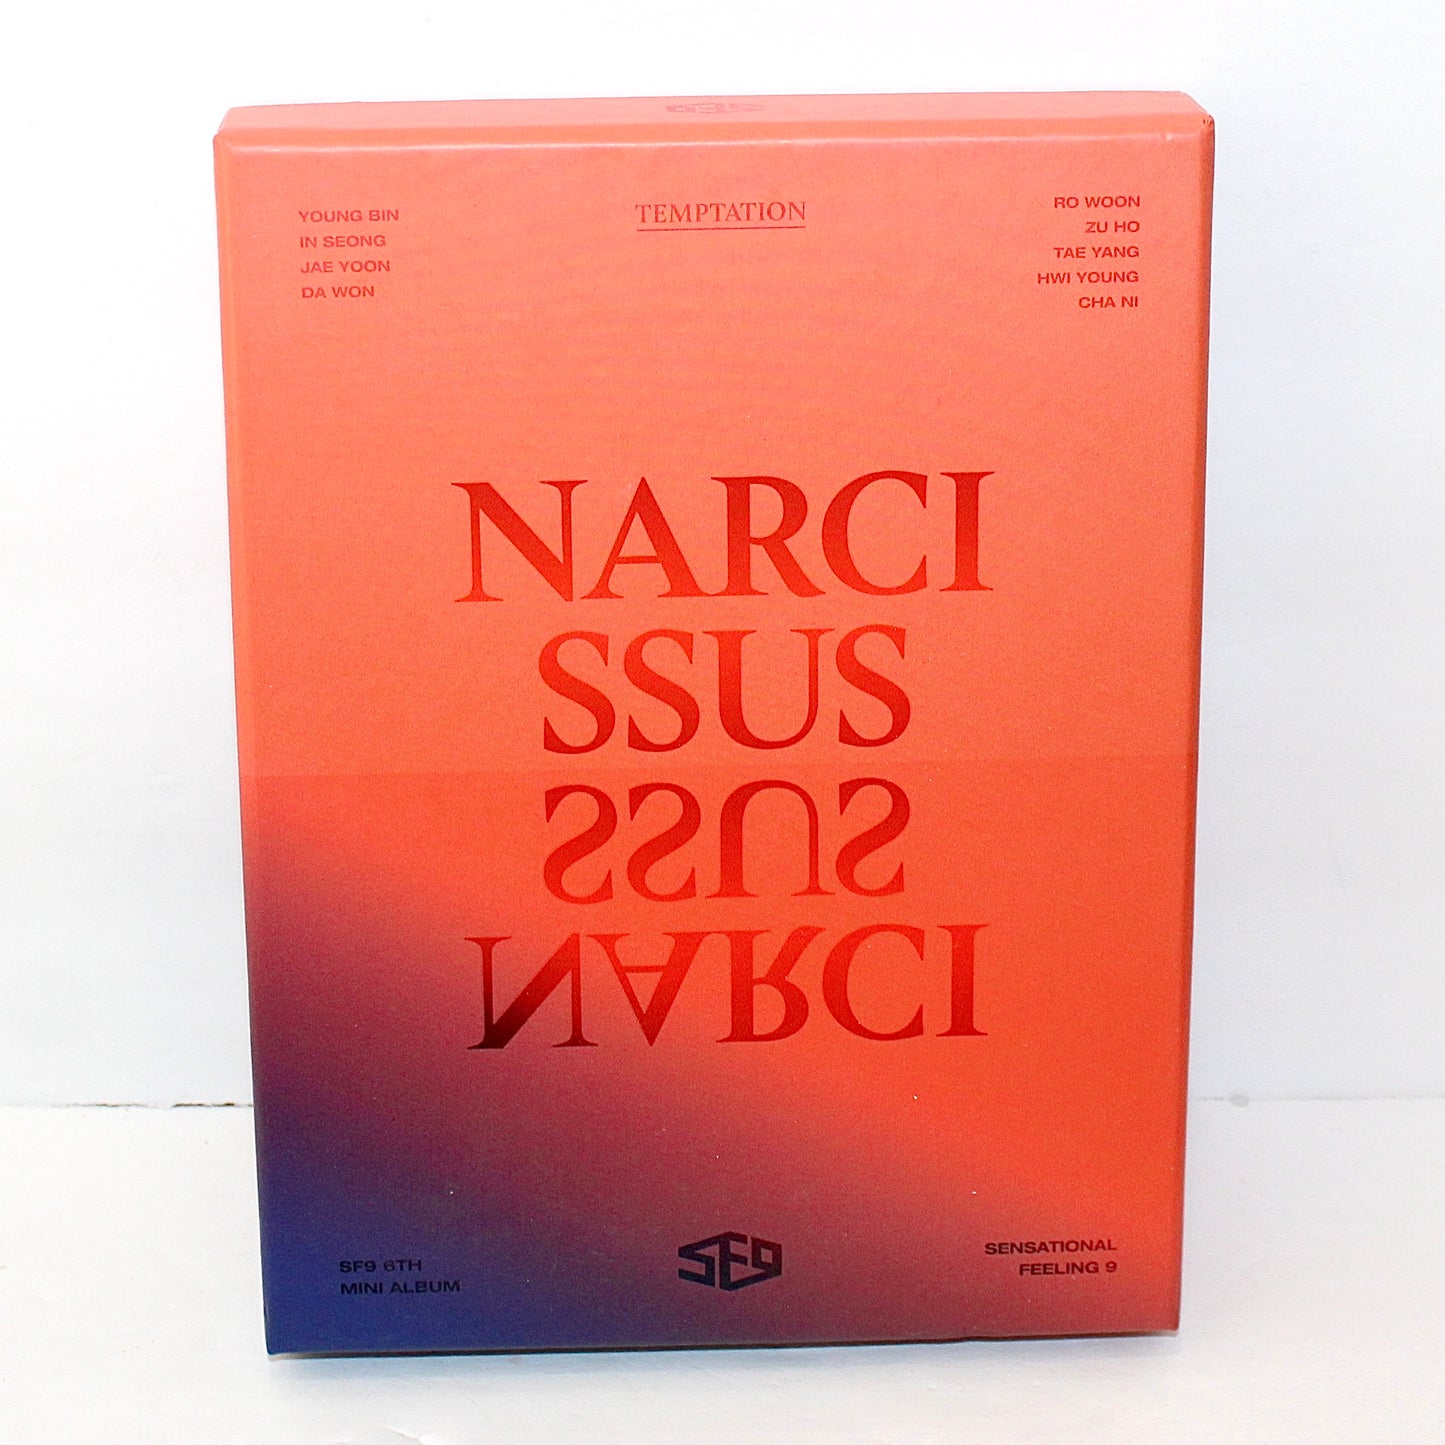 SF9 6th Mini Album: Narcissus | Temptation Ver.